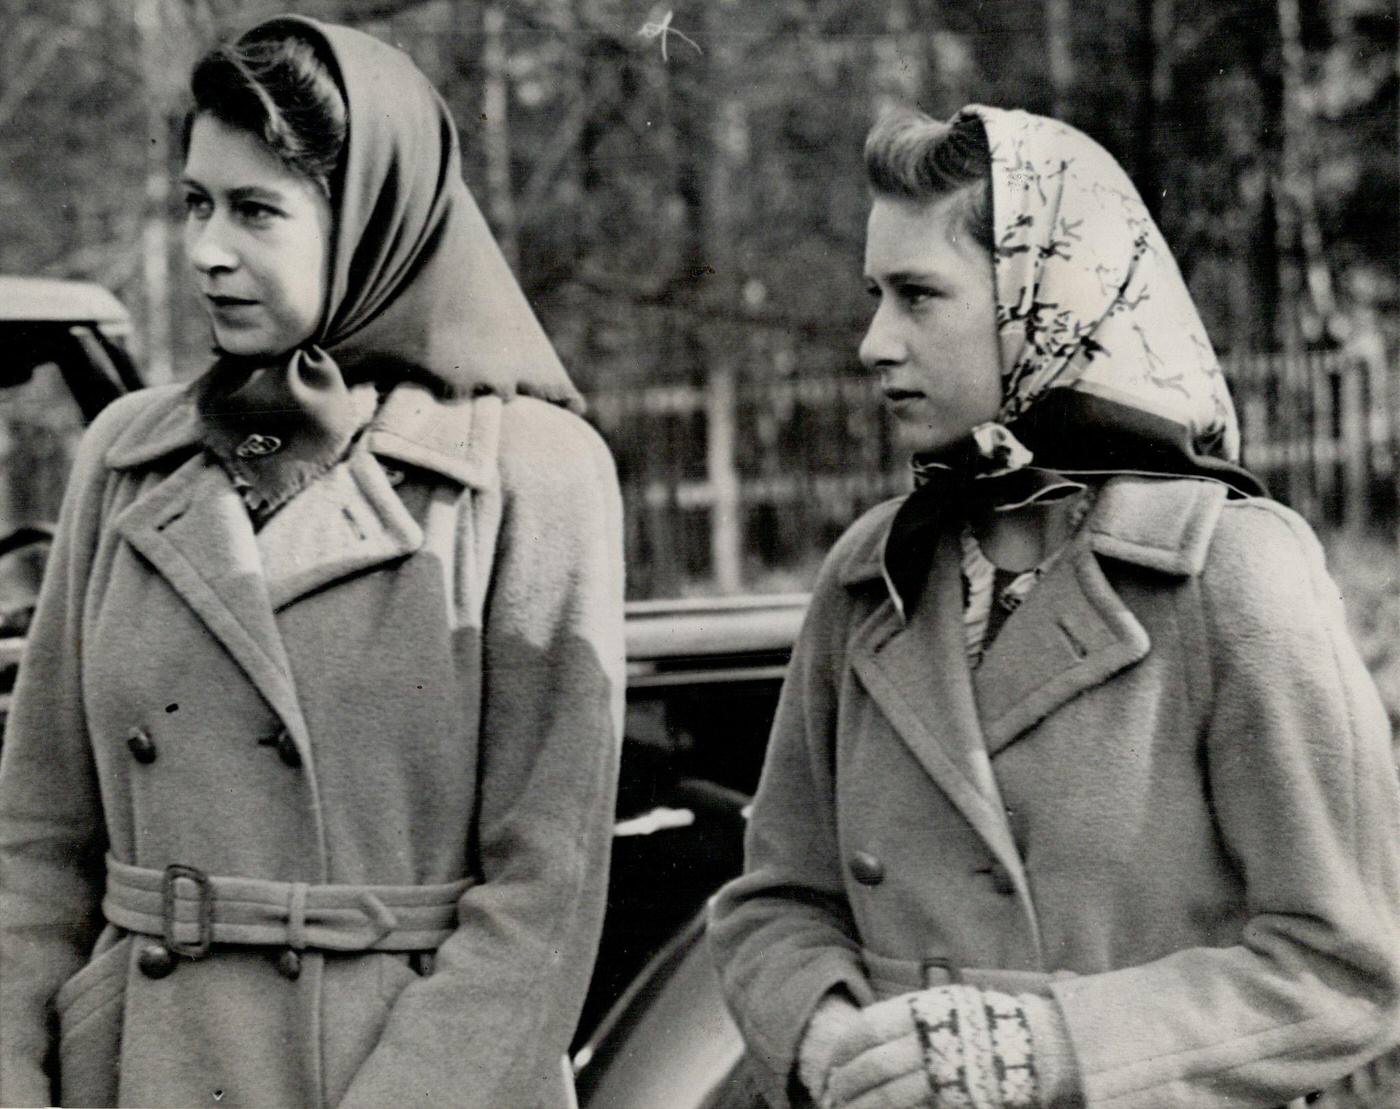 Princess Elizabeth and Princess Margaret attend tree planting ceremonies at Windsor Great Park, 1945